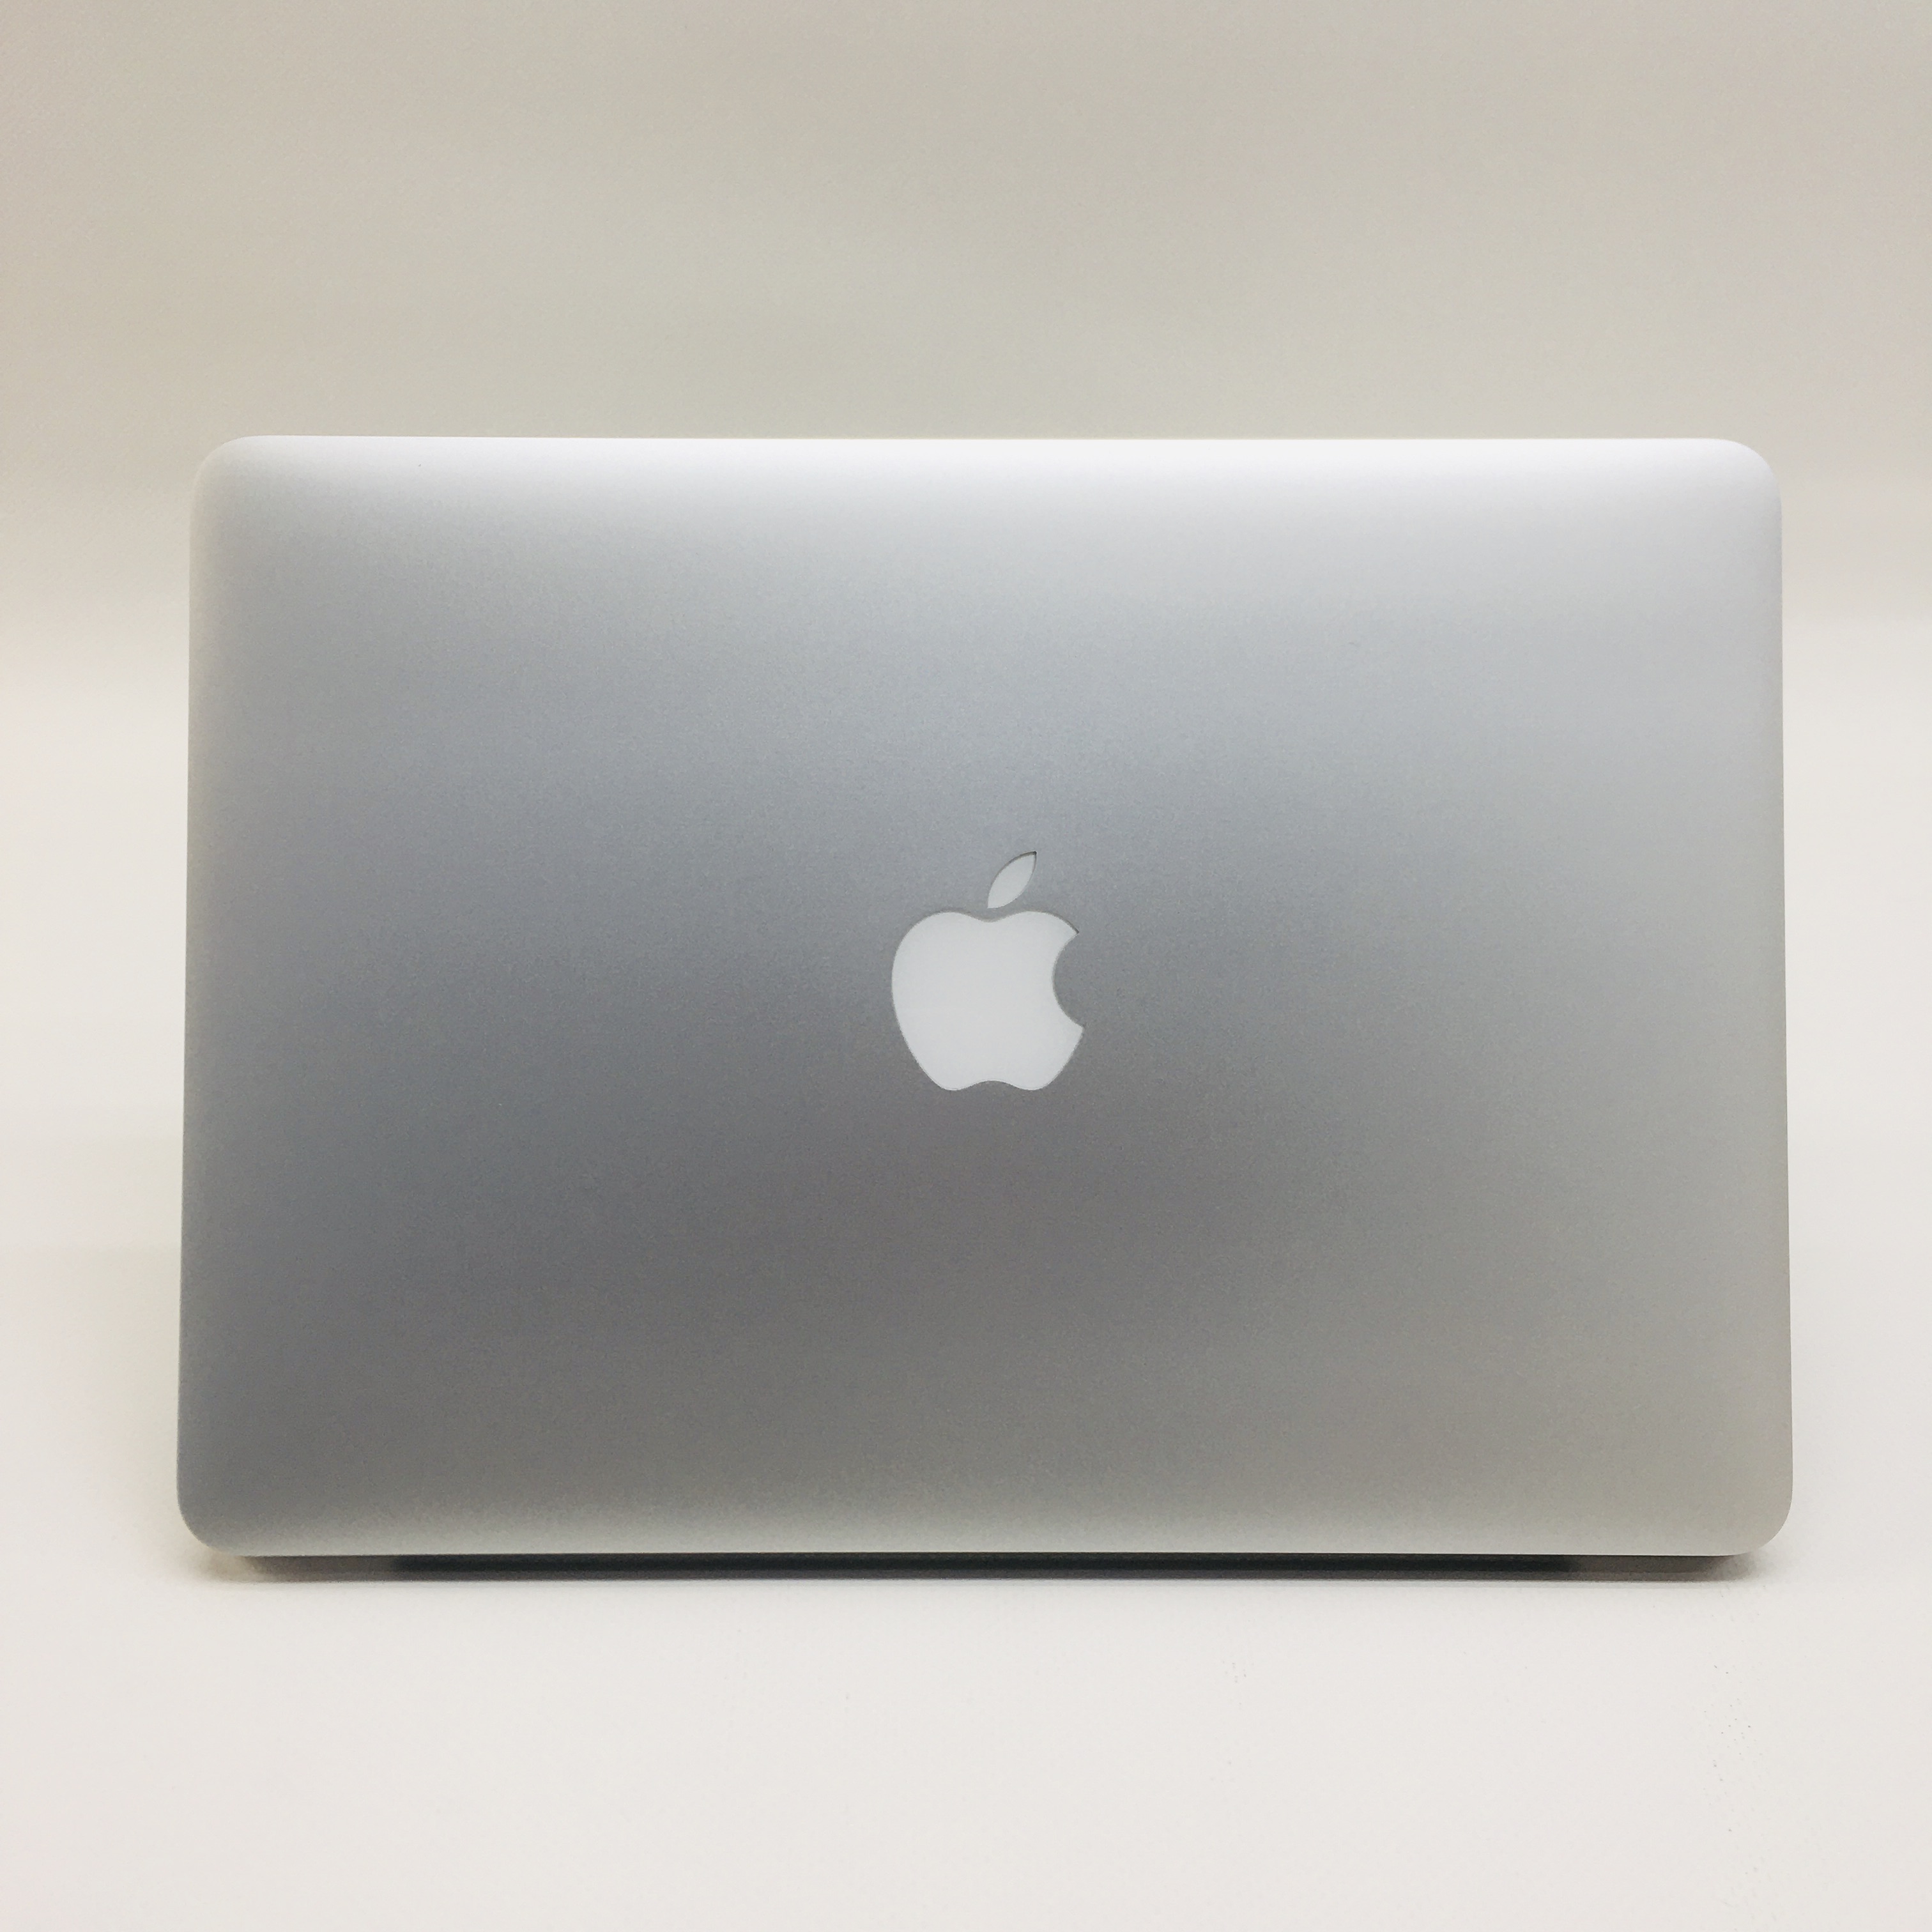 refurbished macbook pro i7 16gb